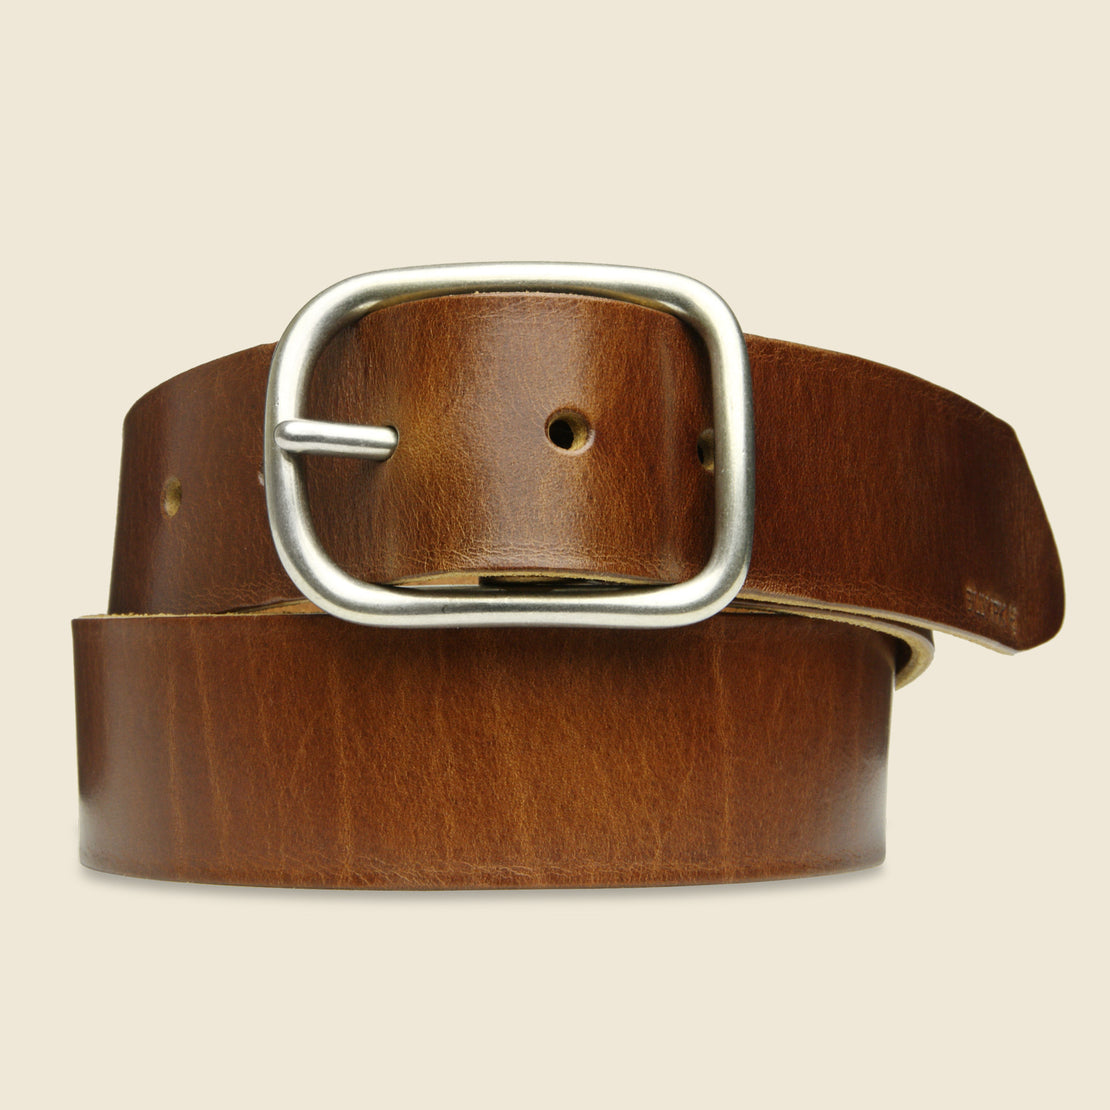 No. 288, Center Bar Leather Belt in Brown by Billykirk